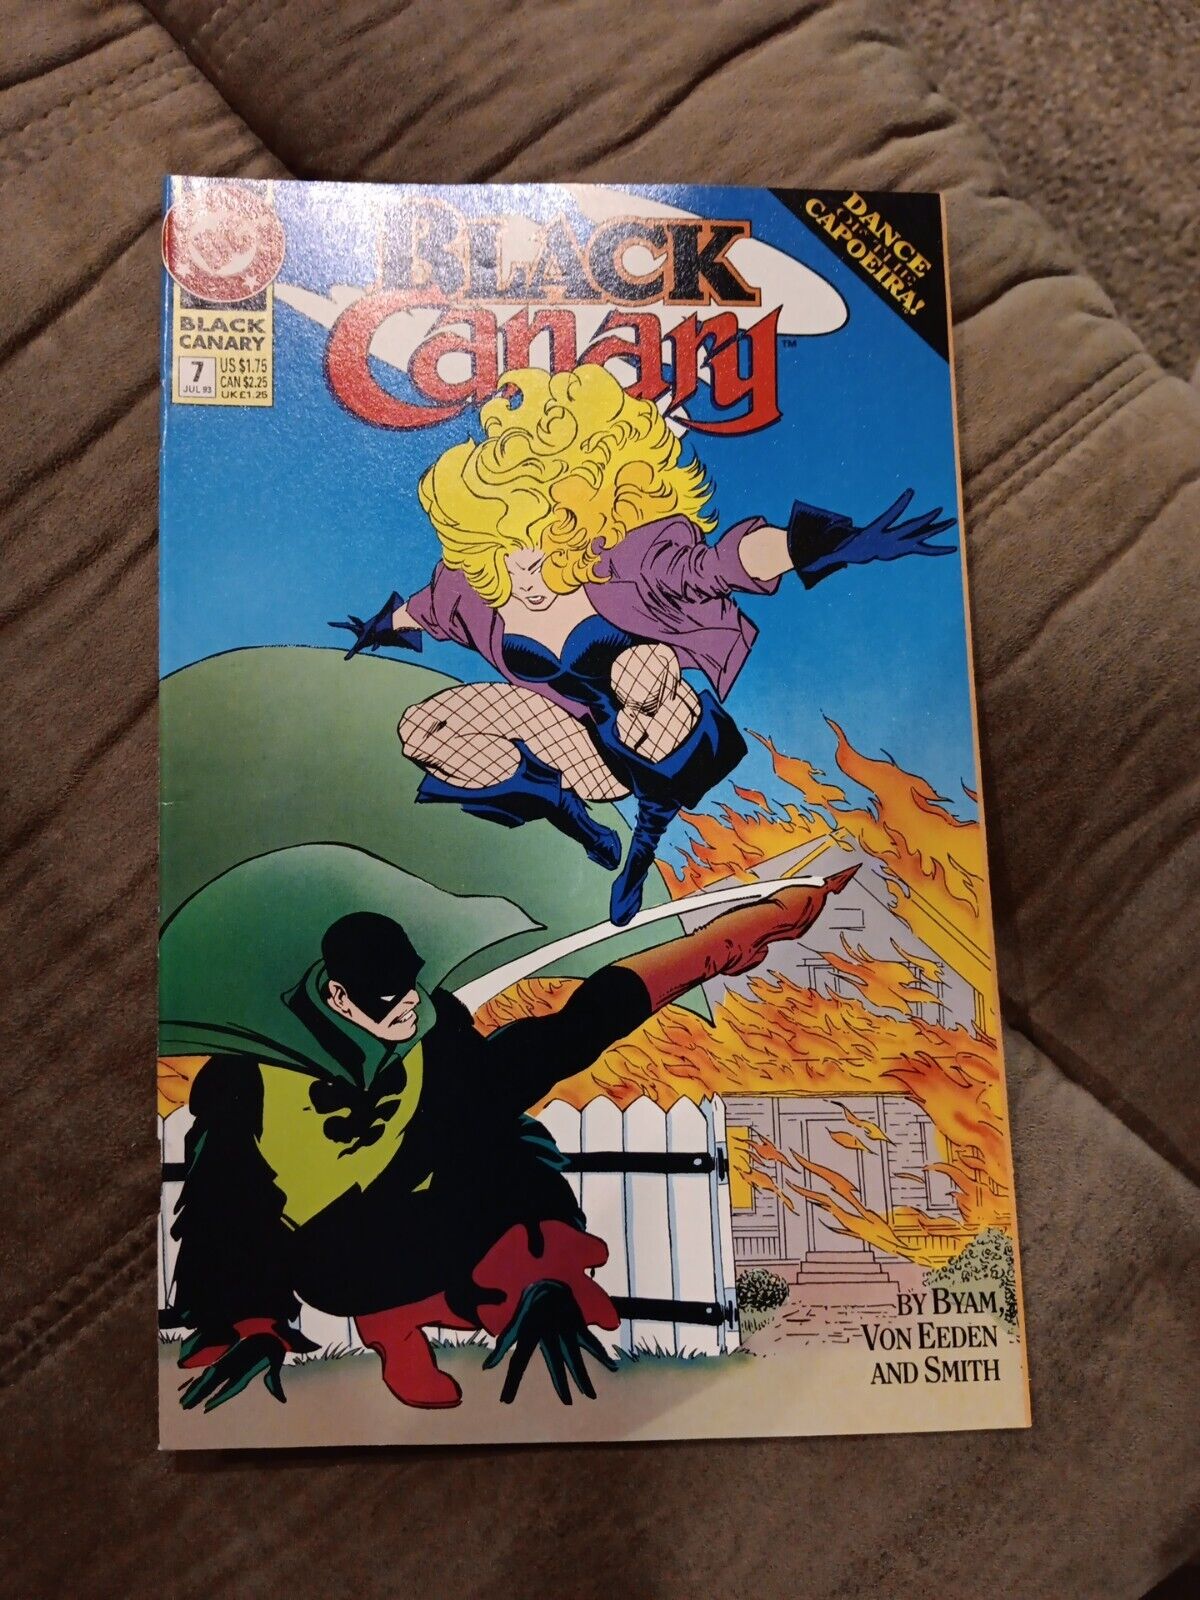 Black Canary (DC Comics, 1993-1994) #7 